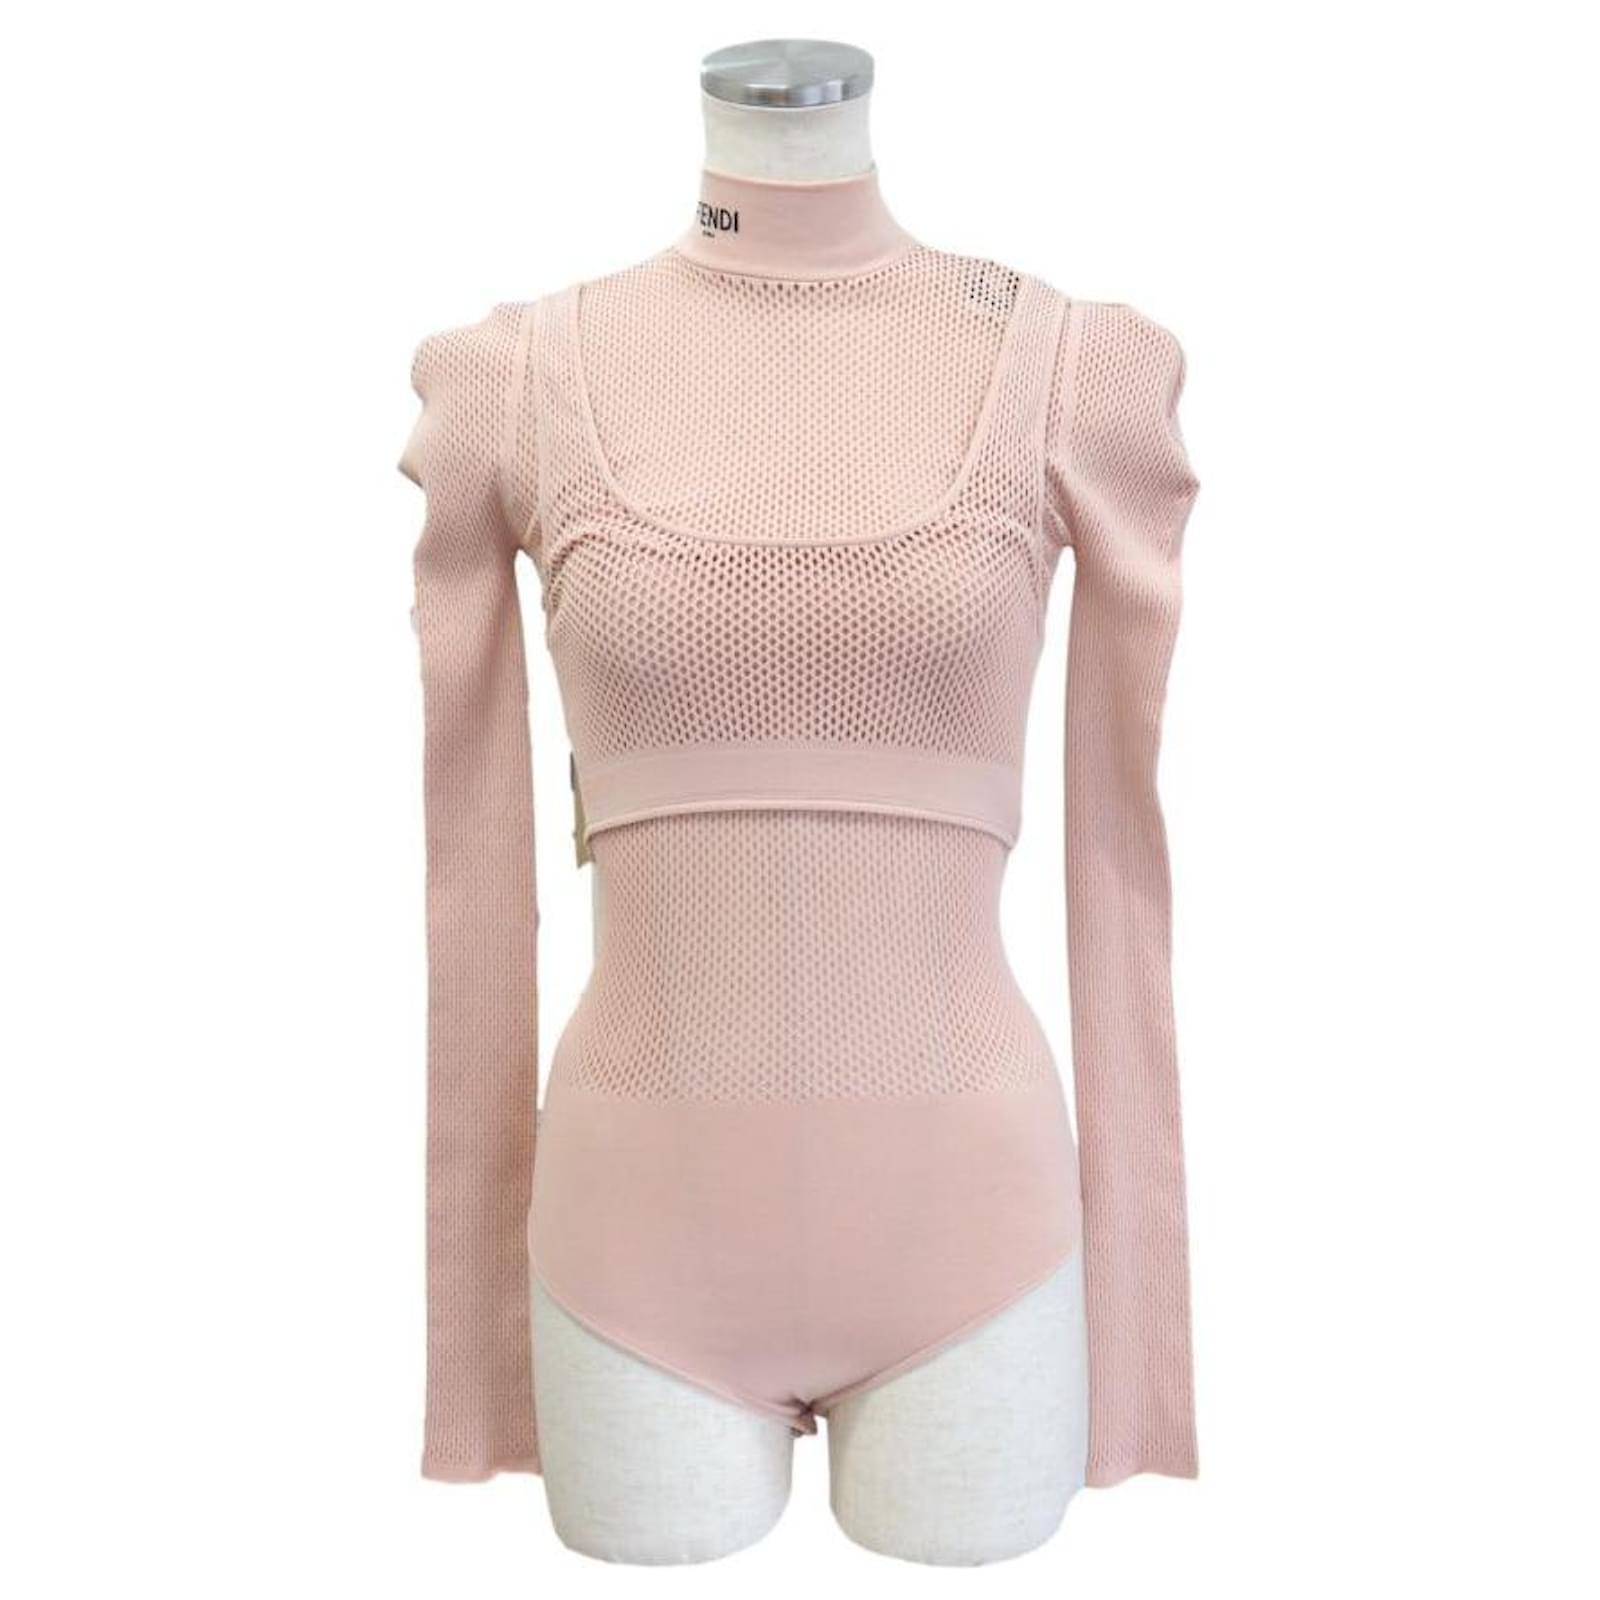 https://cdn1.jolicloset.com/imgr/full/2023/06/906483-1/pink-nylon-fendi-mesh-body-suit-tank-top.jpg